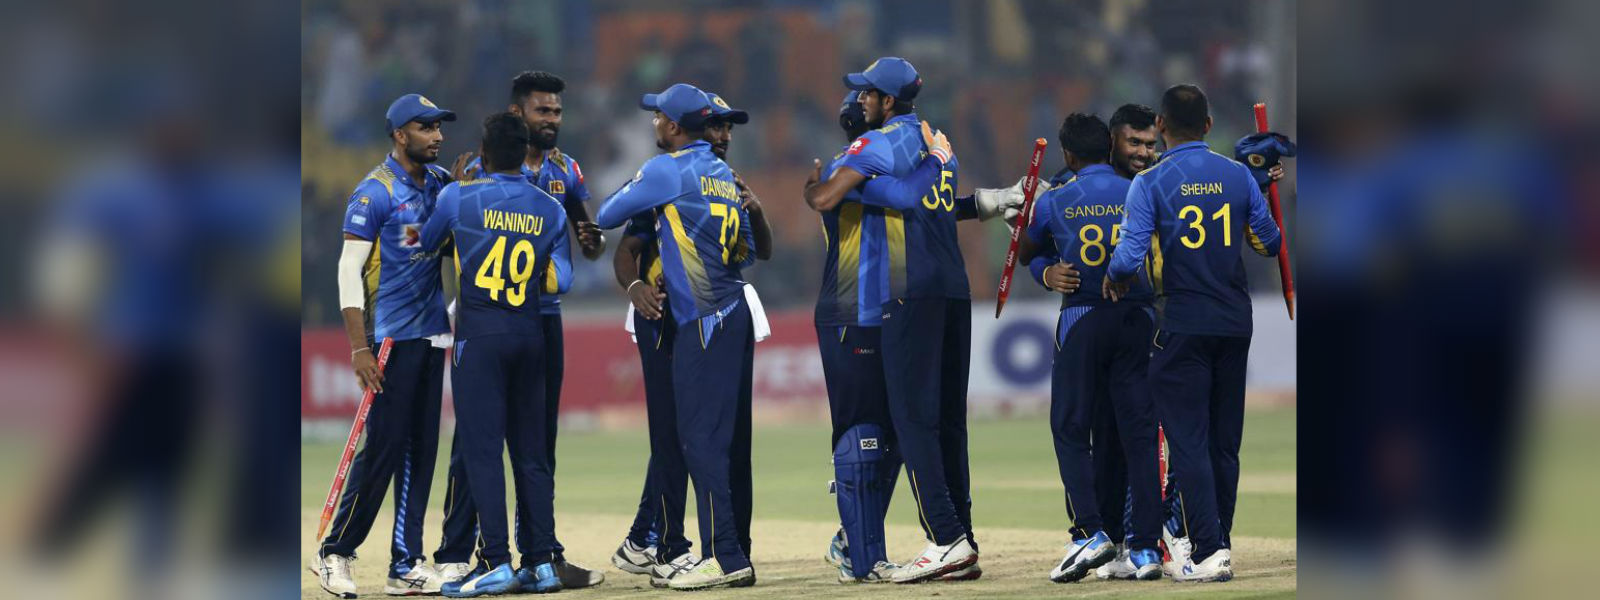 Sri Lanka beat Pakistan in a T20 after 6 years